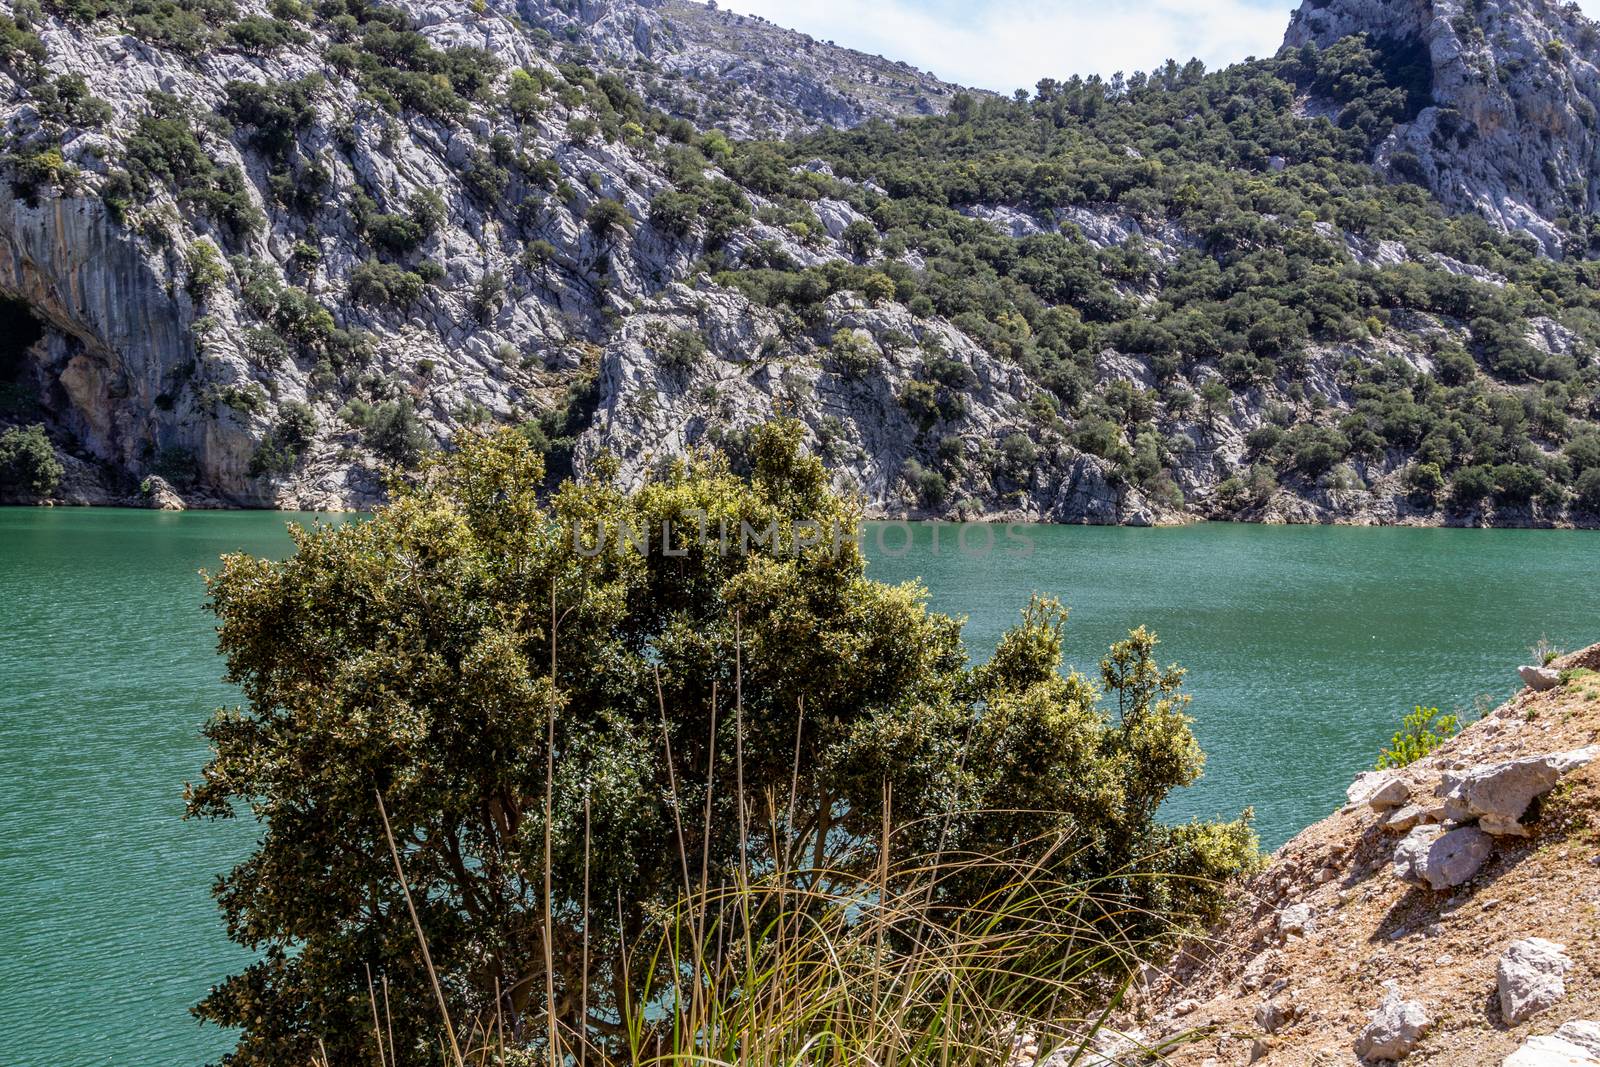 Water reservoir  Gorg Blau at Mallorca, Spain by reinerc